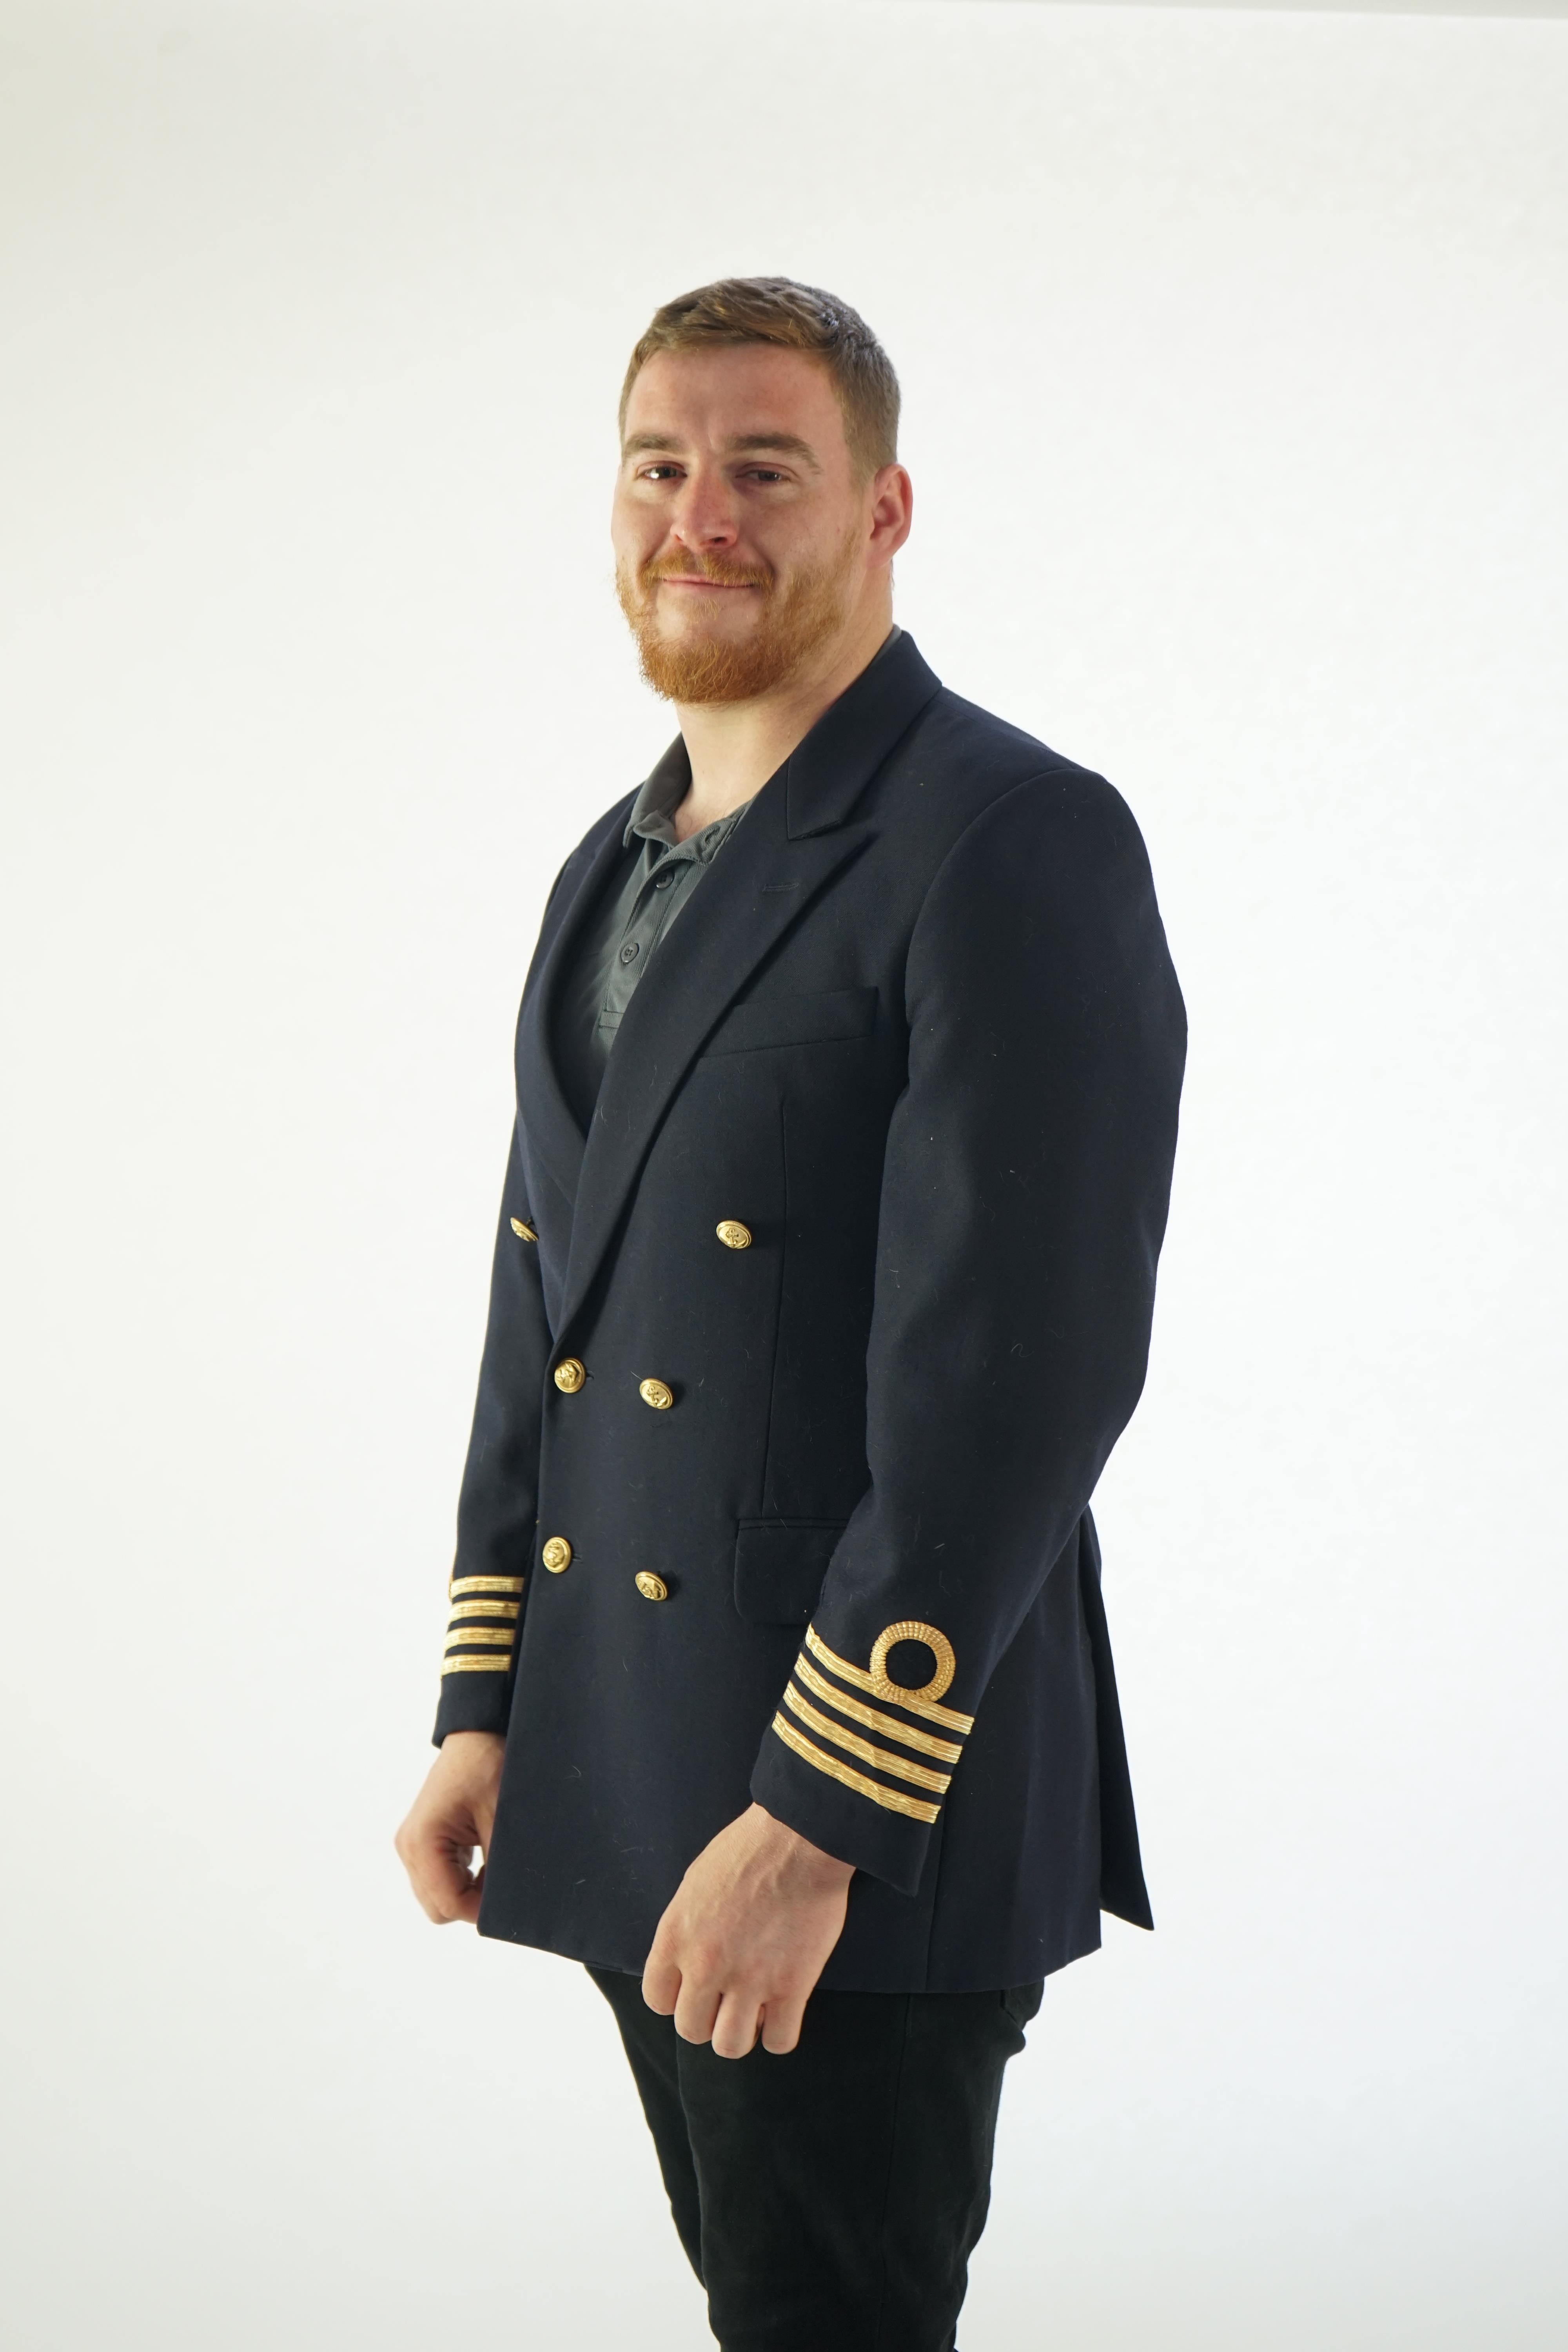 A modern naval style black-navy uniform jacket with gold trim.